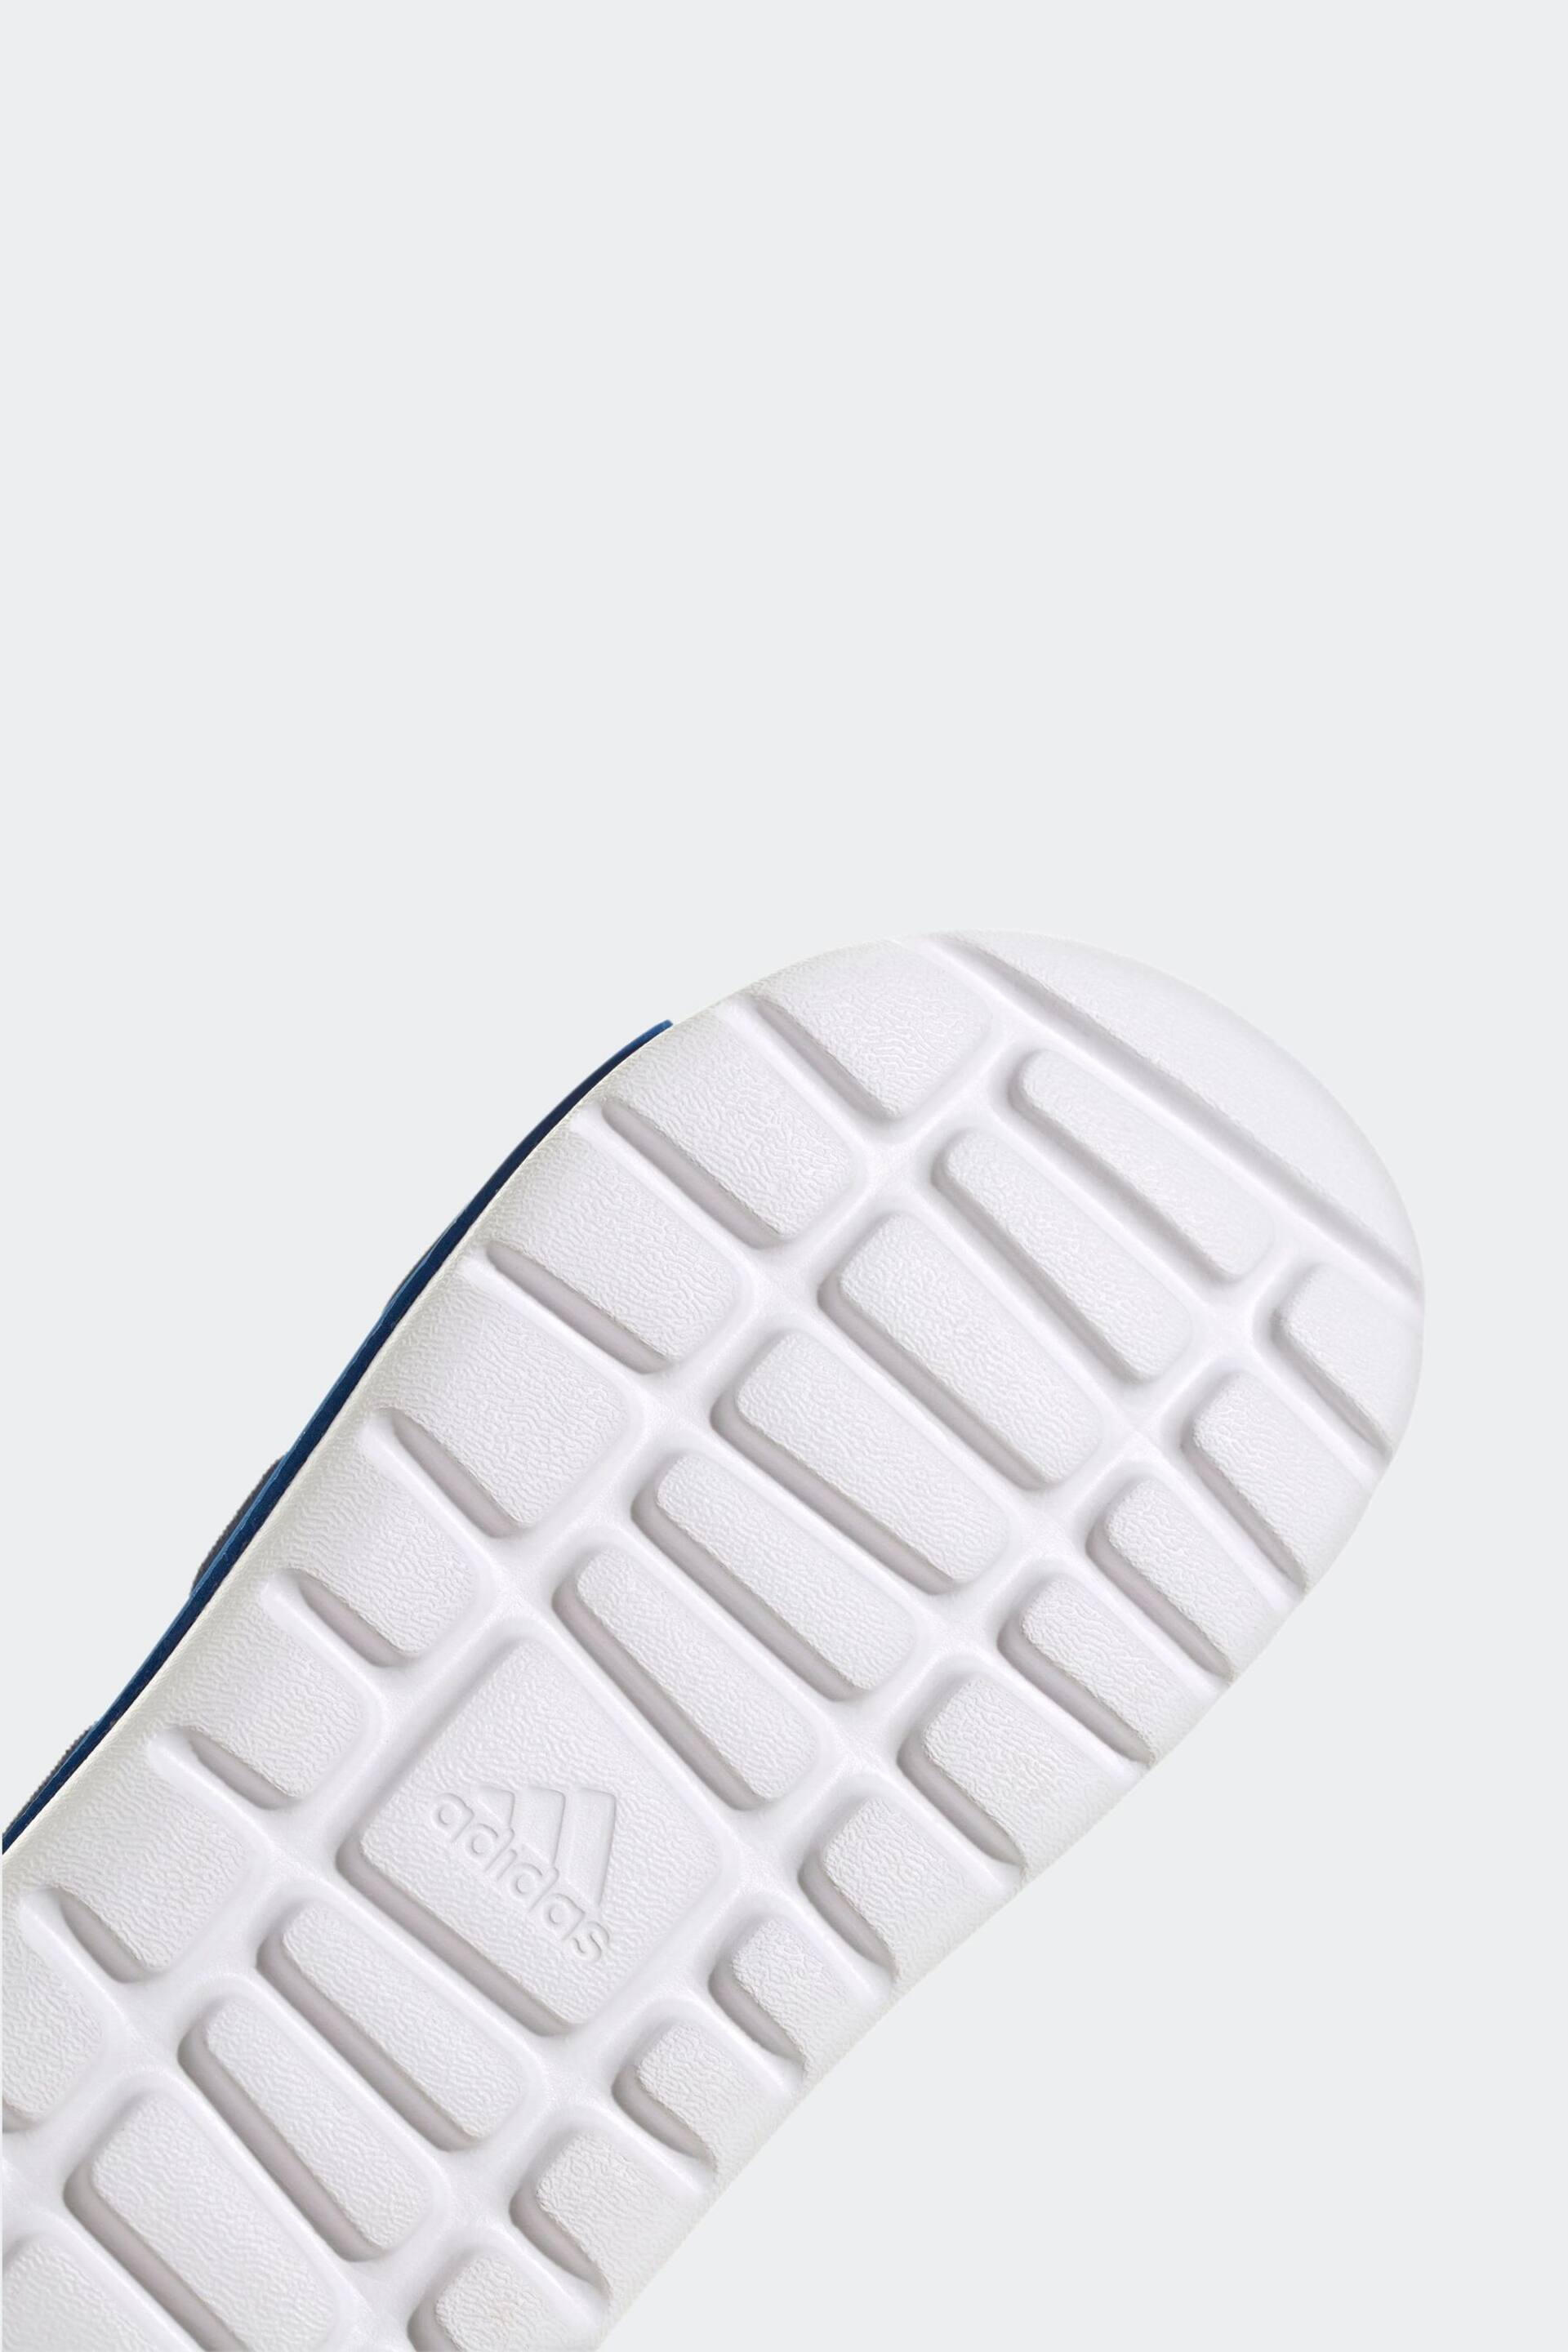 adidas Blue Sportswear Altaswim 2.0 Sandals - Image 9 of 9